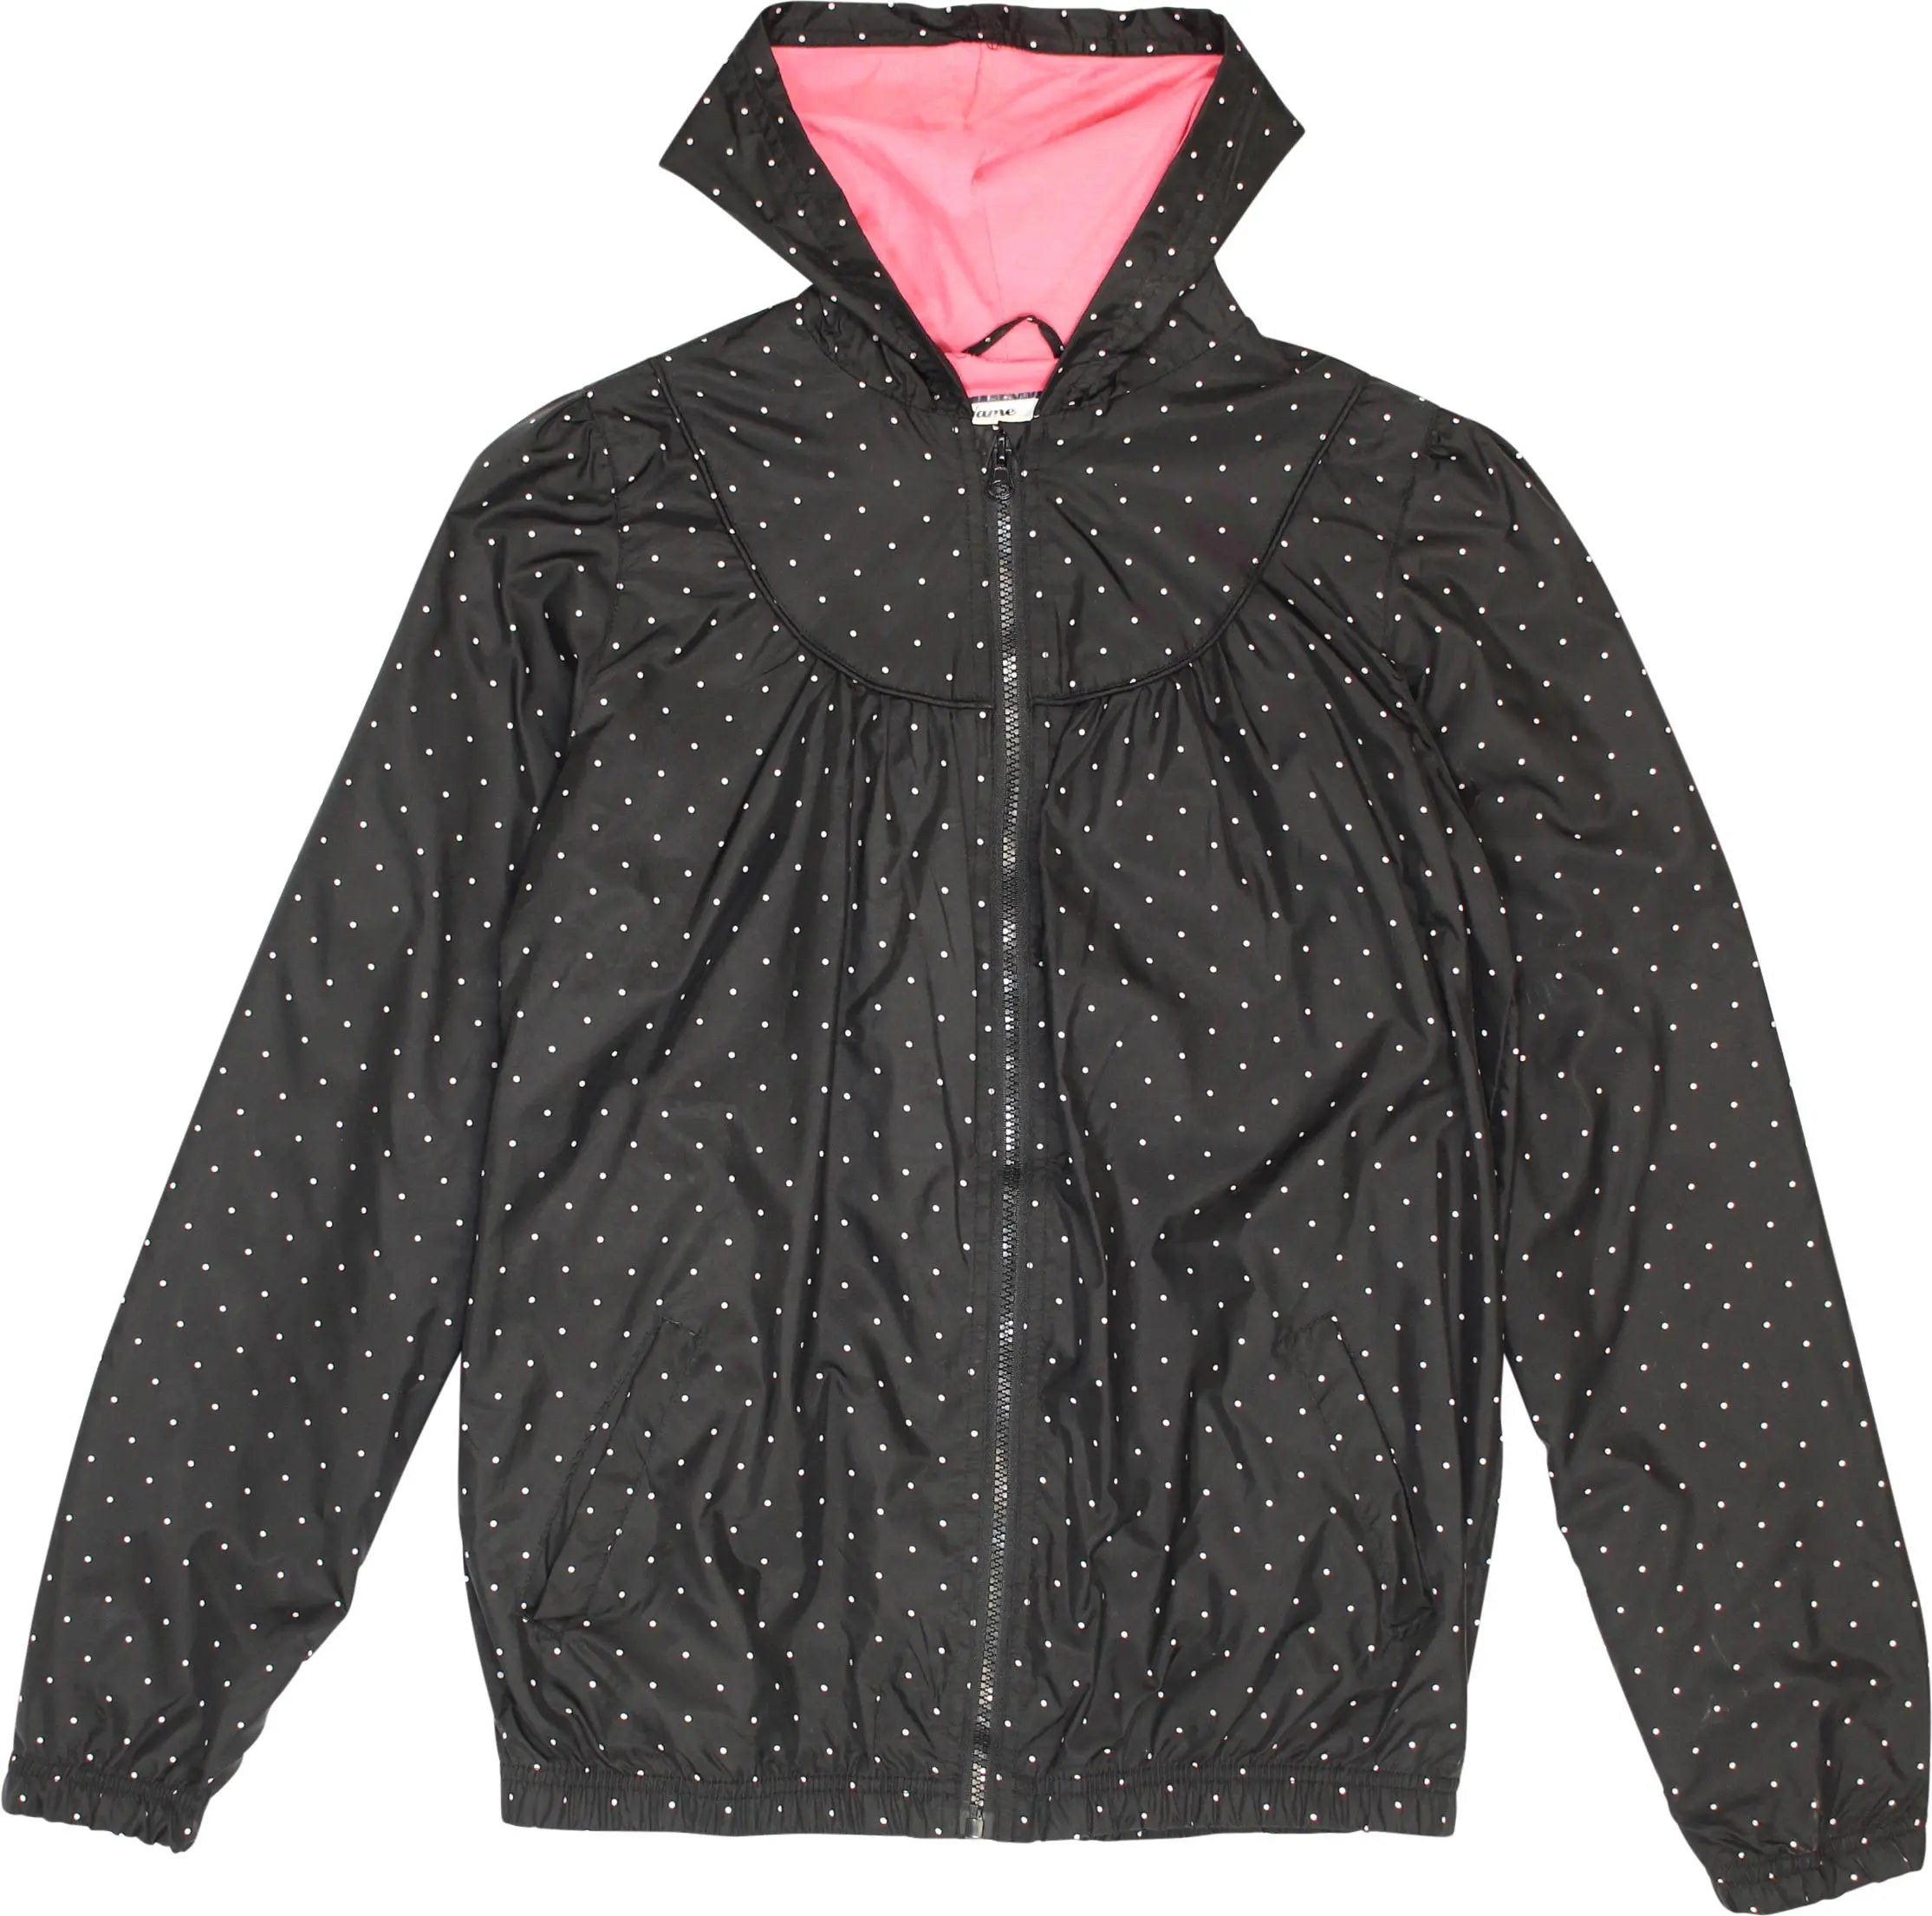 Zeeman - Black Polkadot Jacket- ThriftTale.com - Vintage and second handclothing